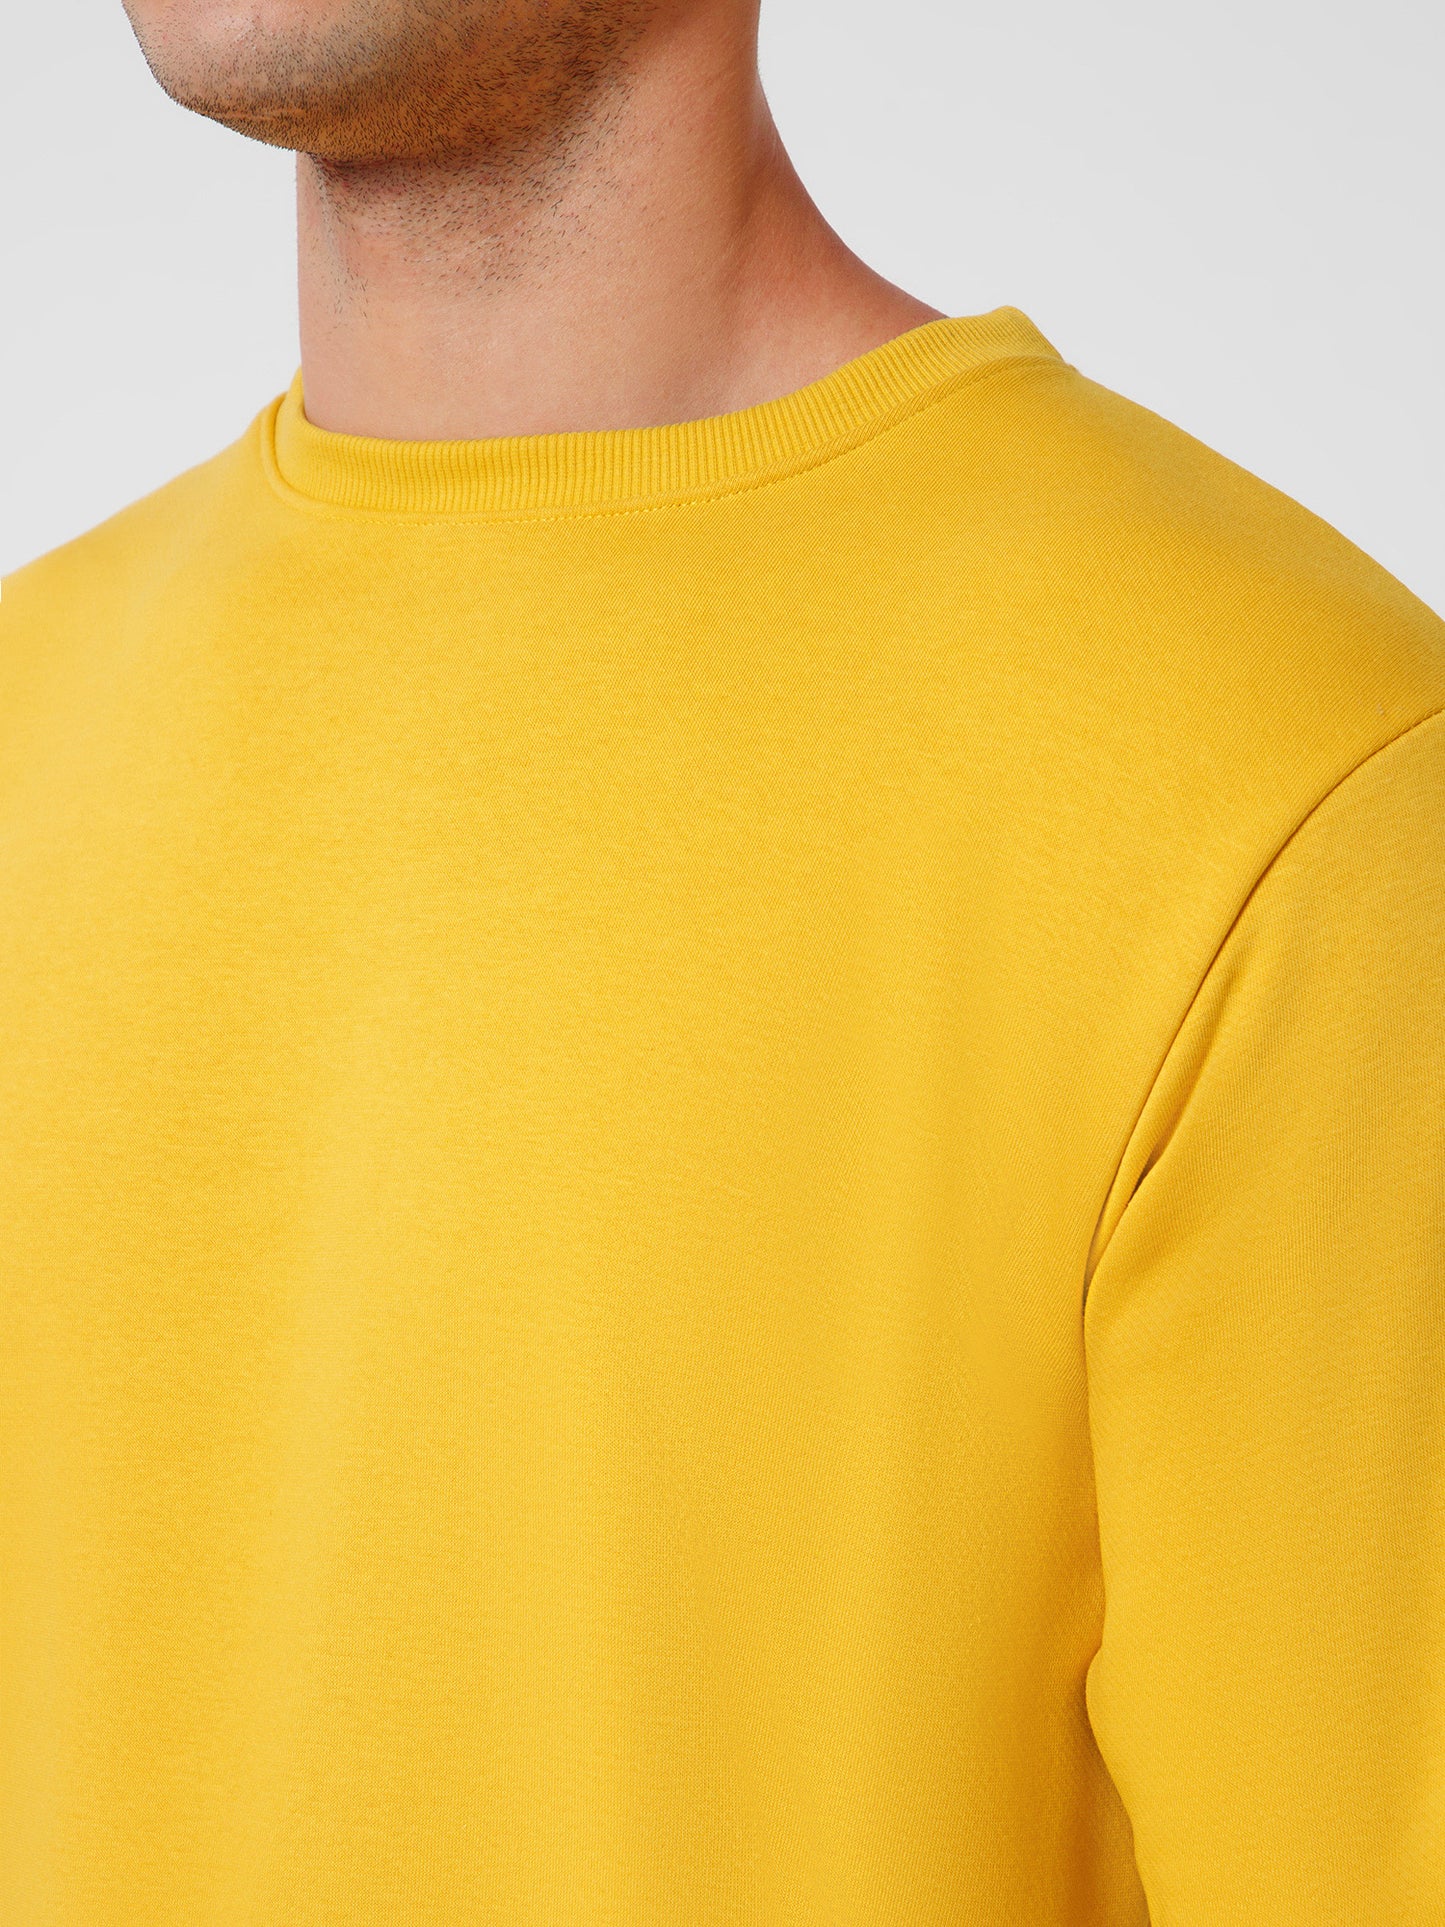 Solid  Mustard Sweatshirt